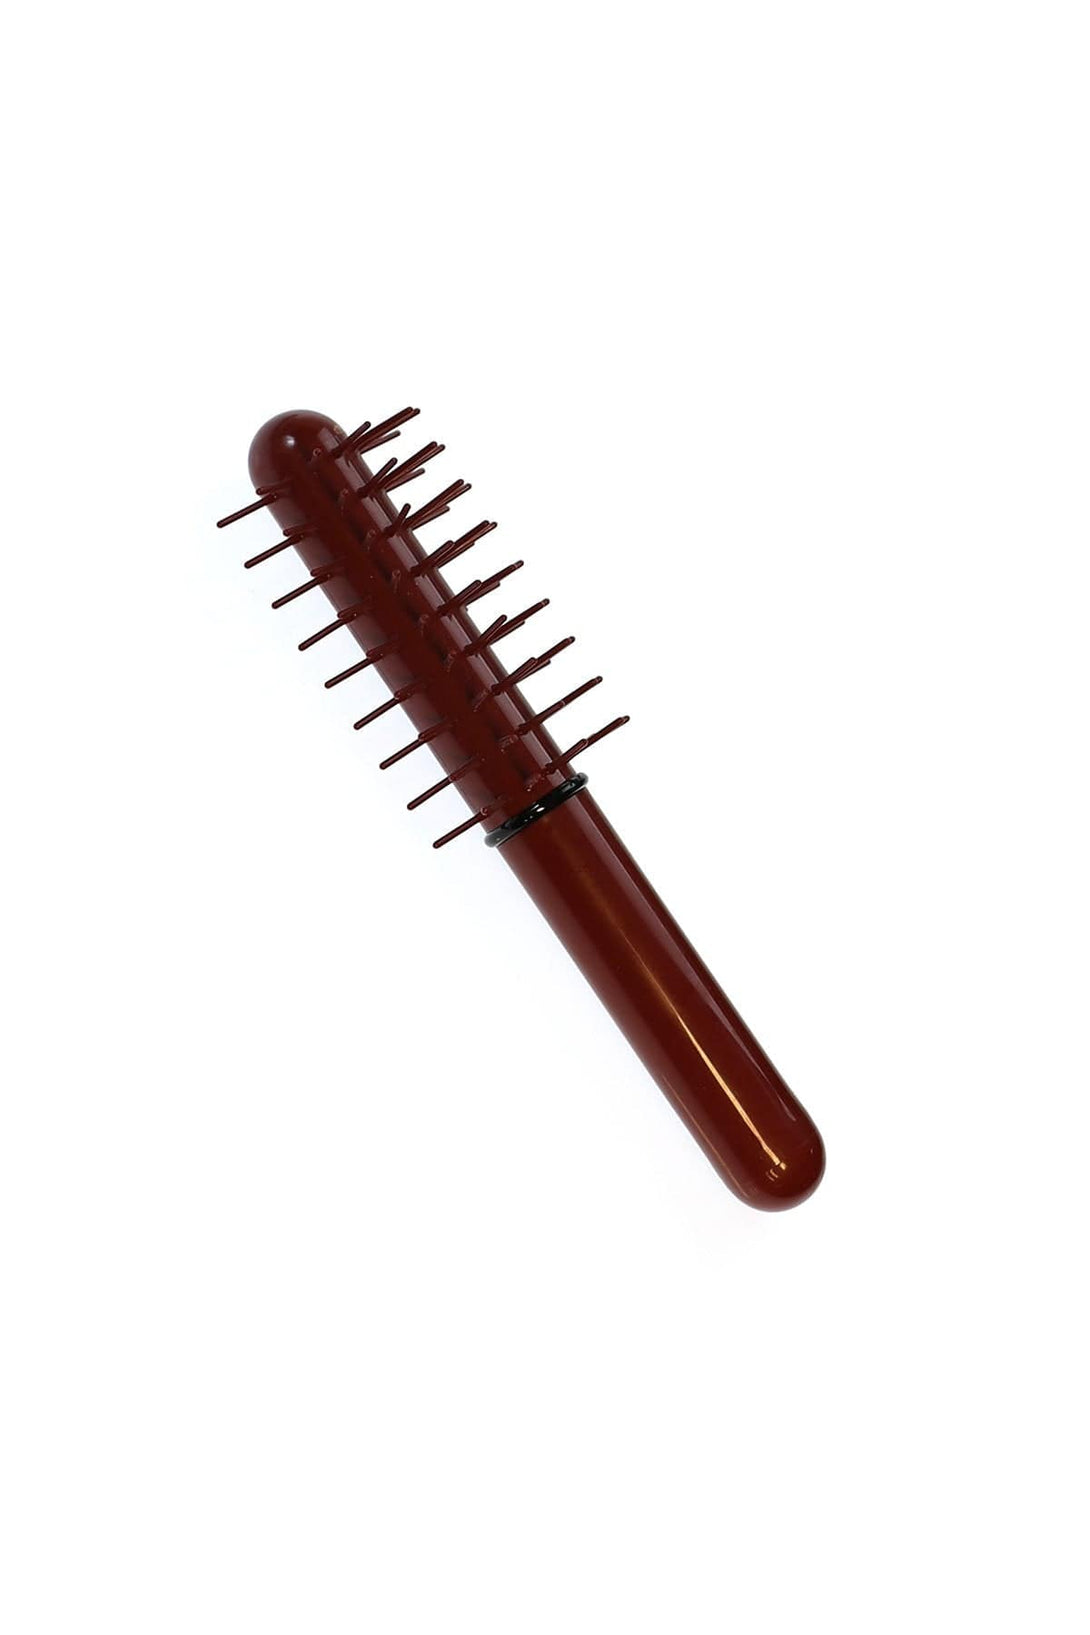 Buch and Deichmann Round Hair Brush Grooming Tool